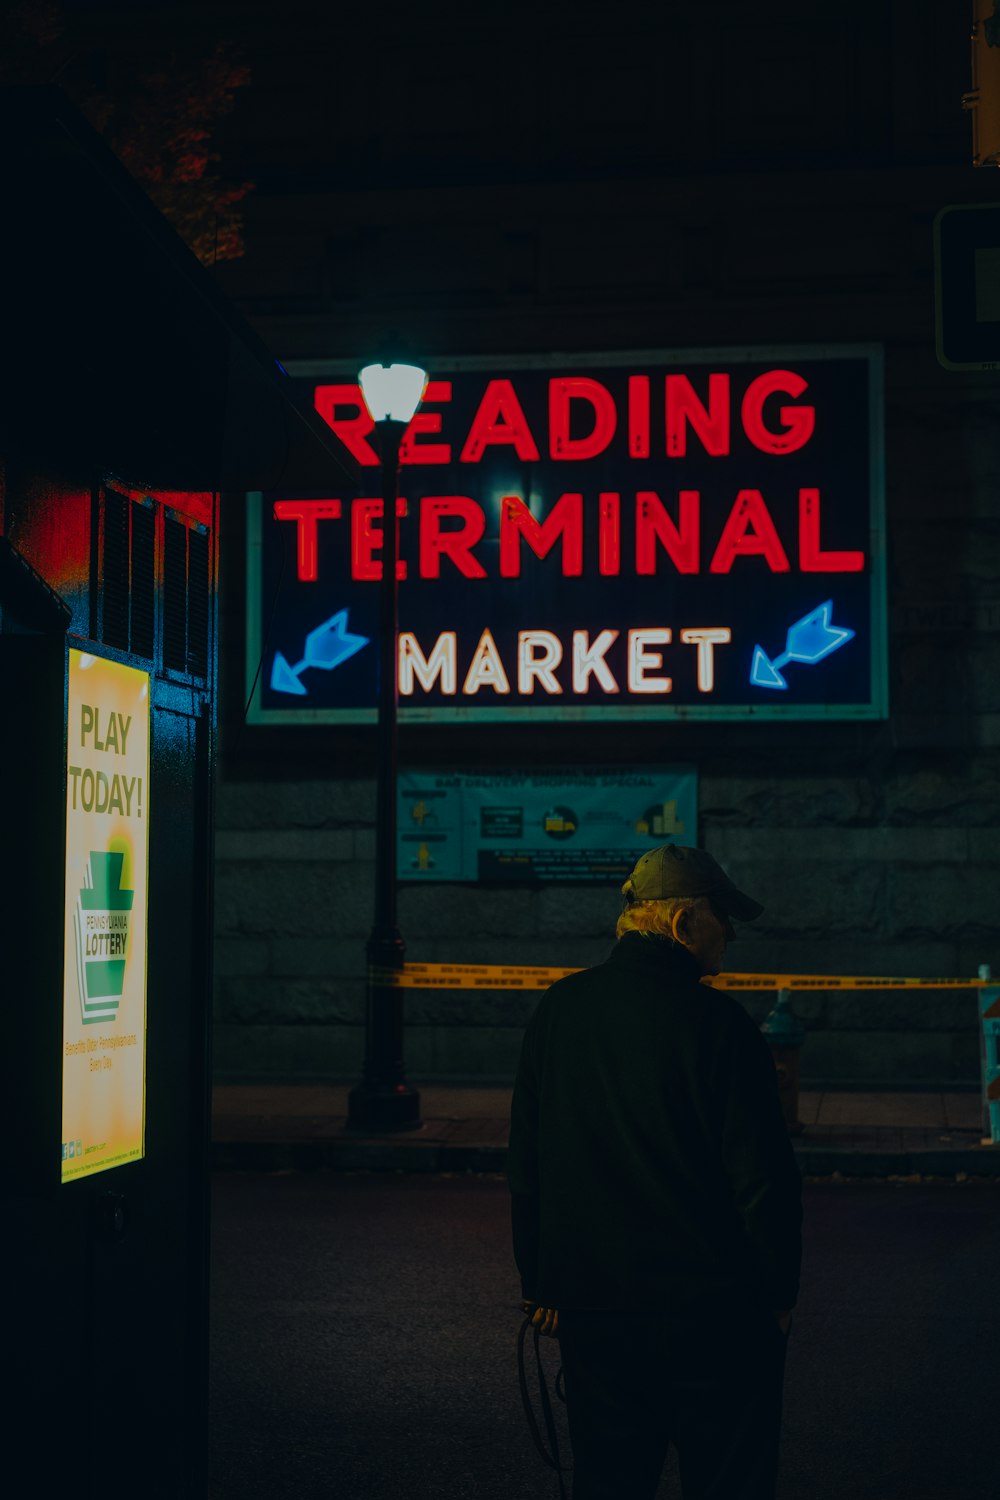 Reading Terminal Market sign